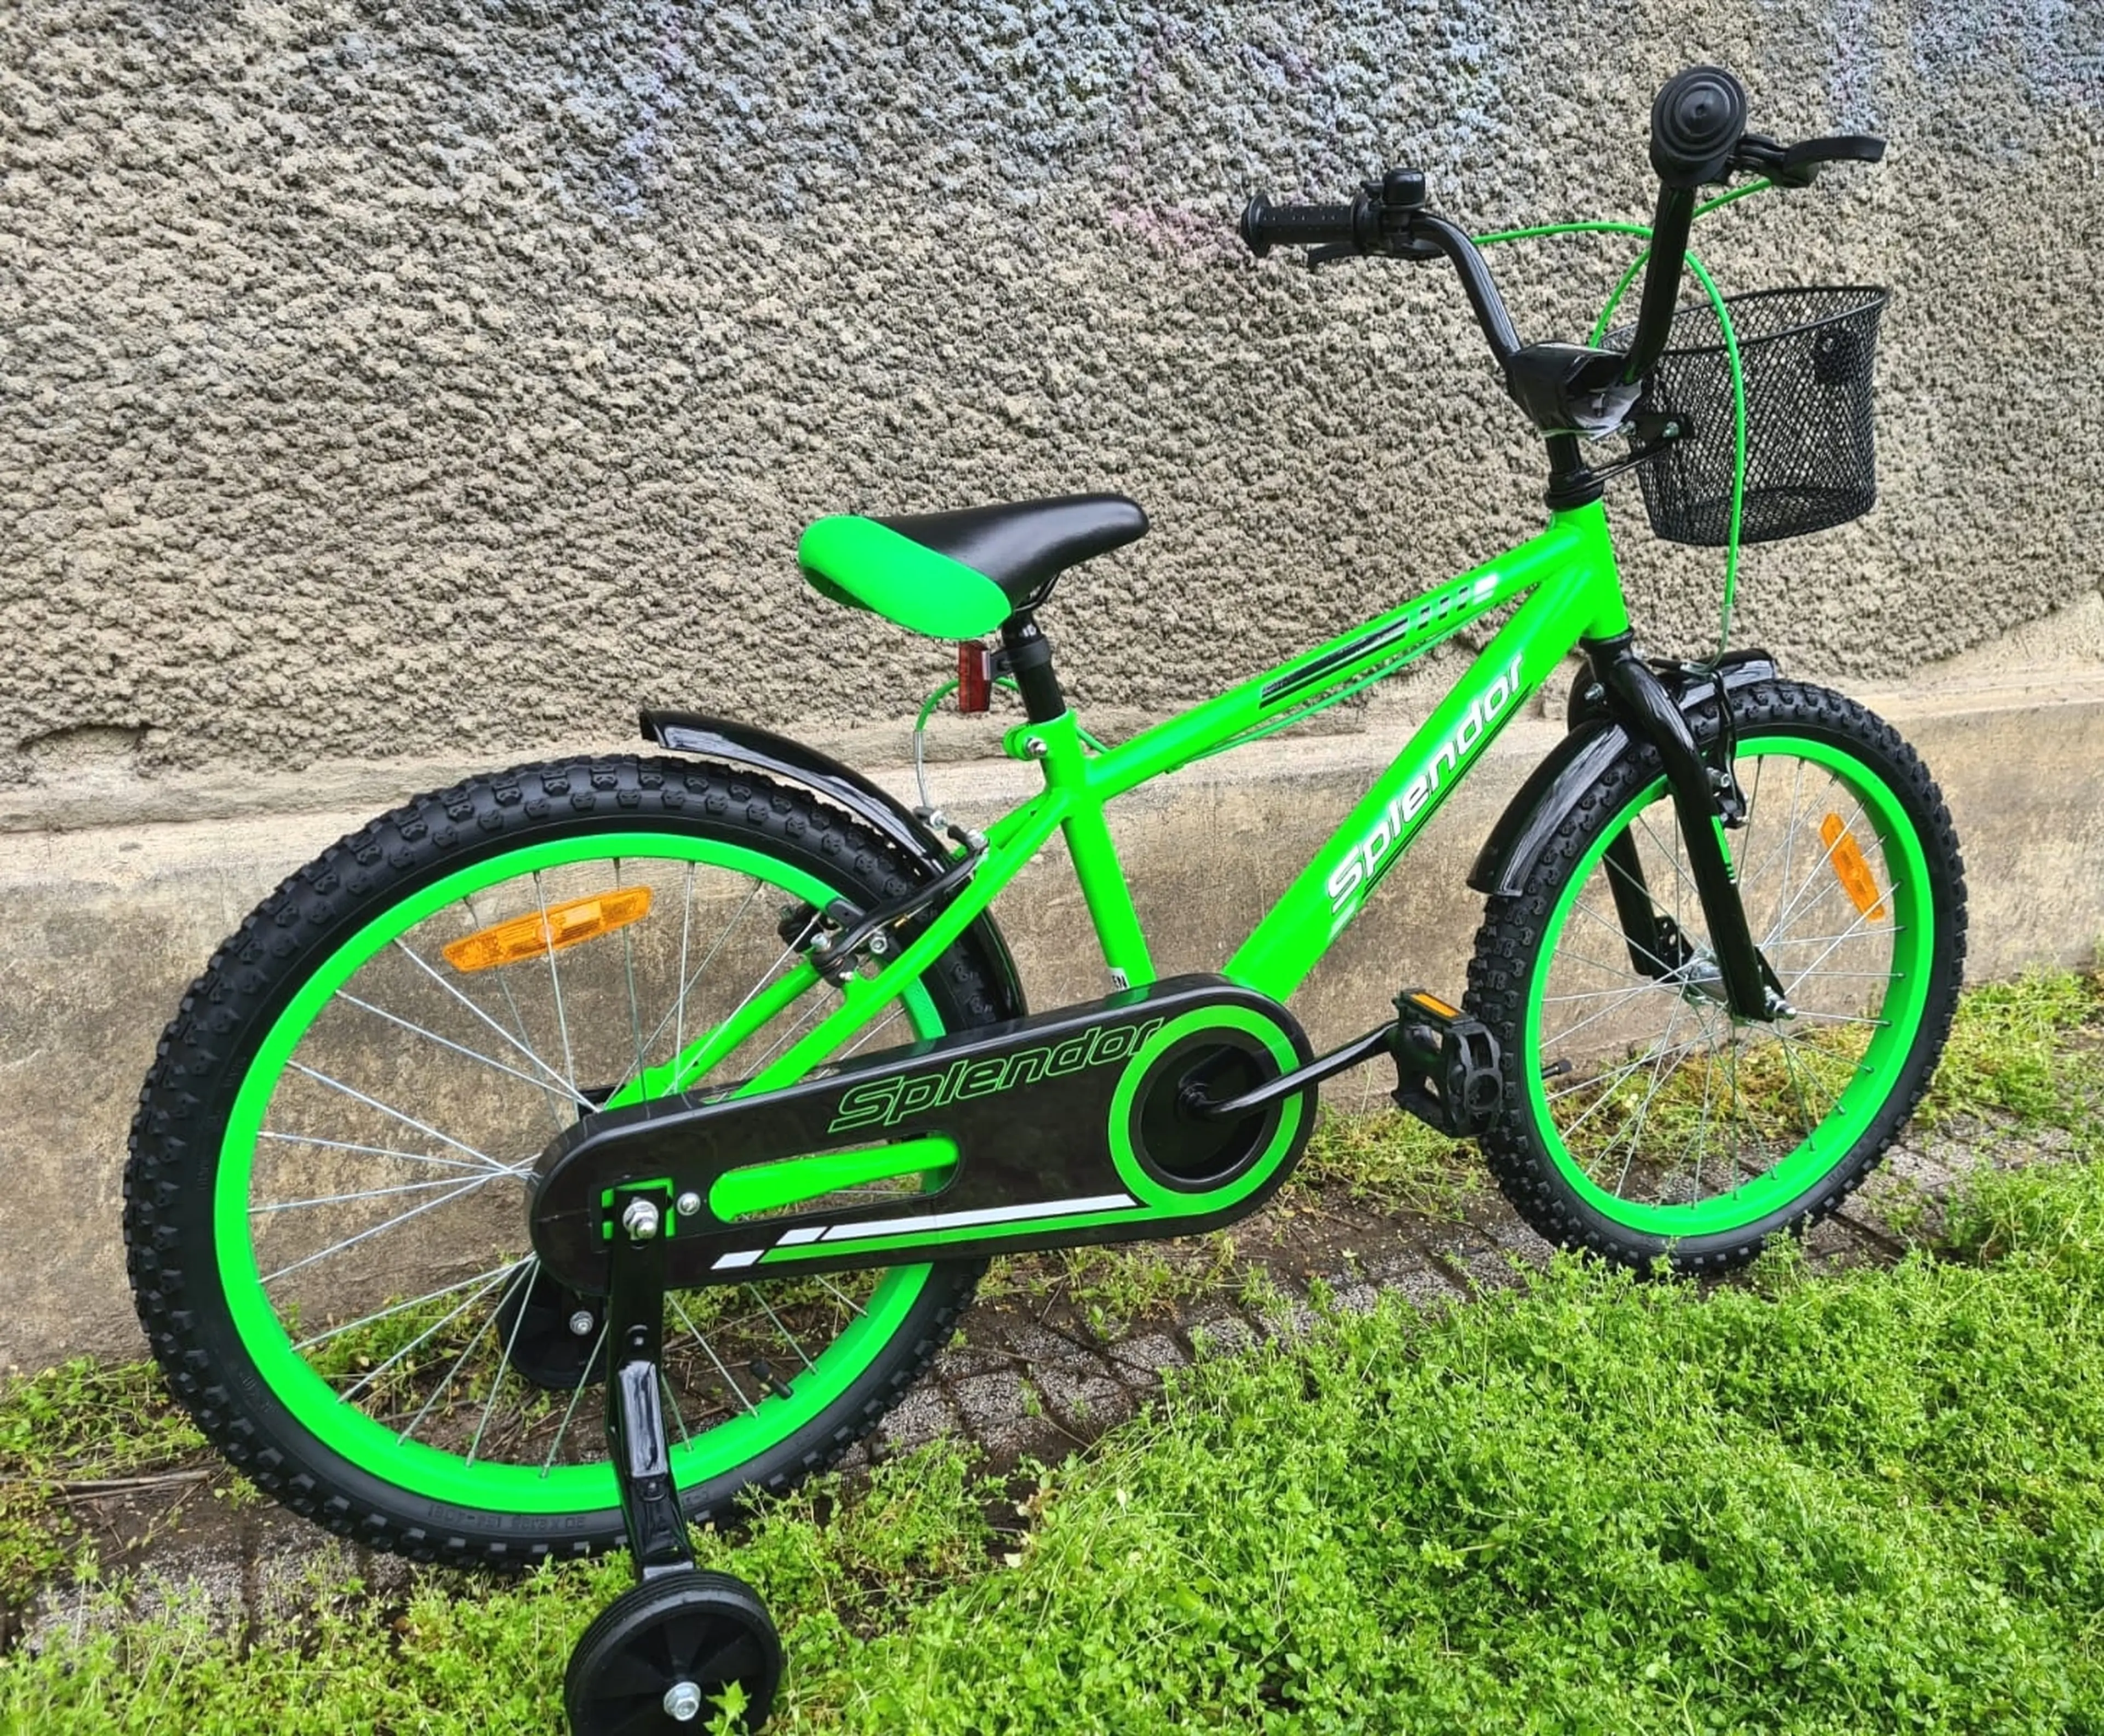 5. Bicicleta Splendor 20 inch pentru copii